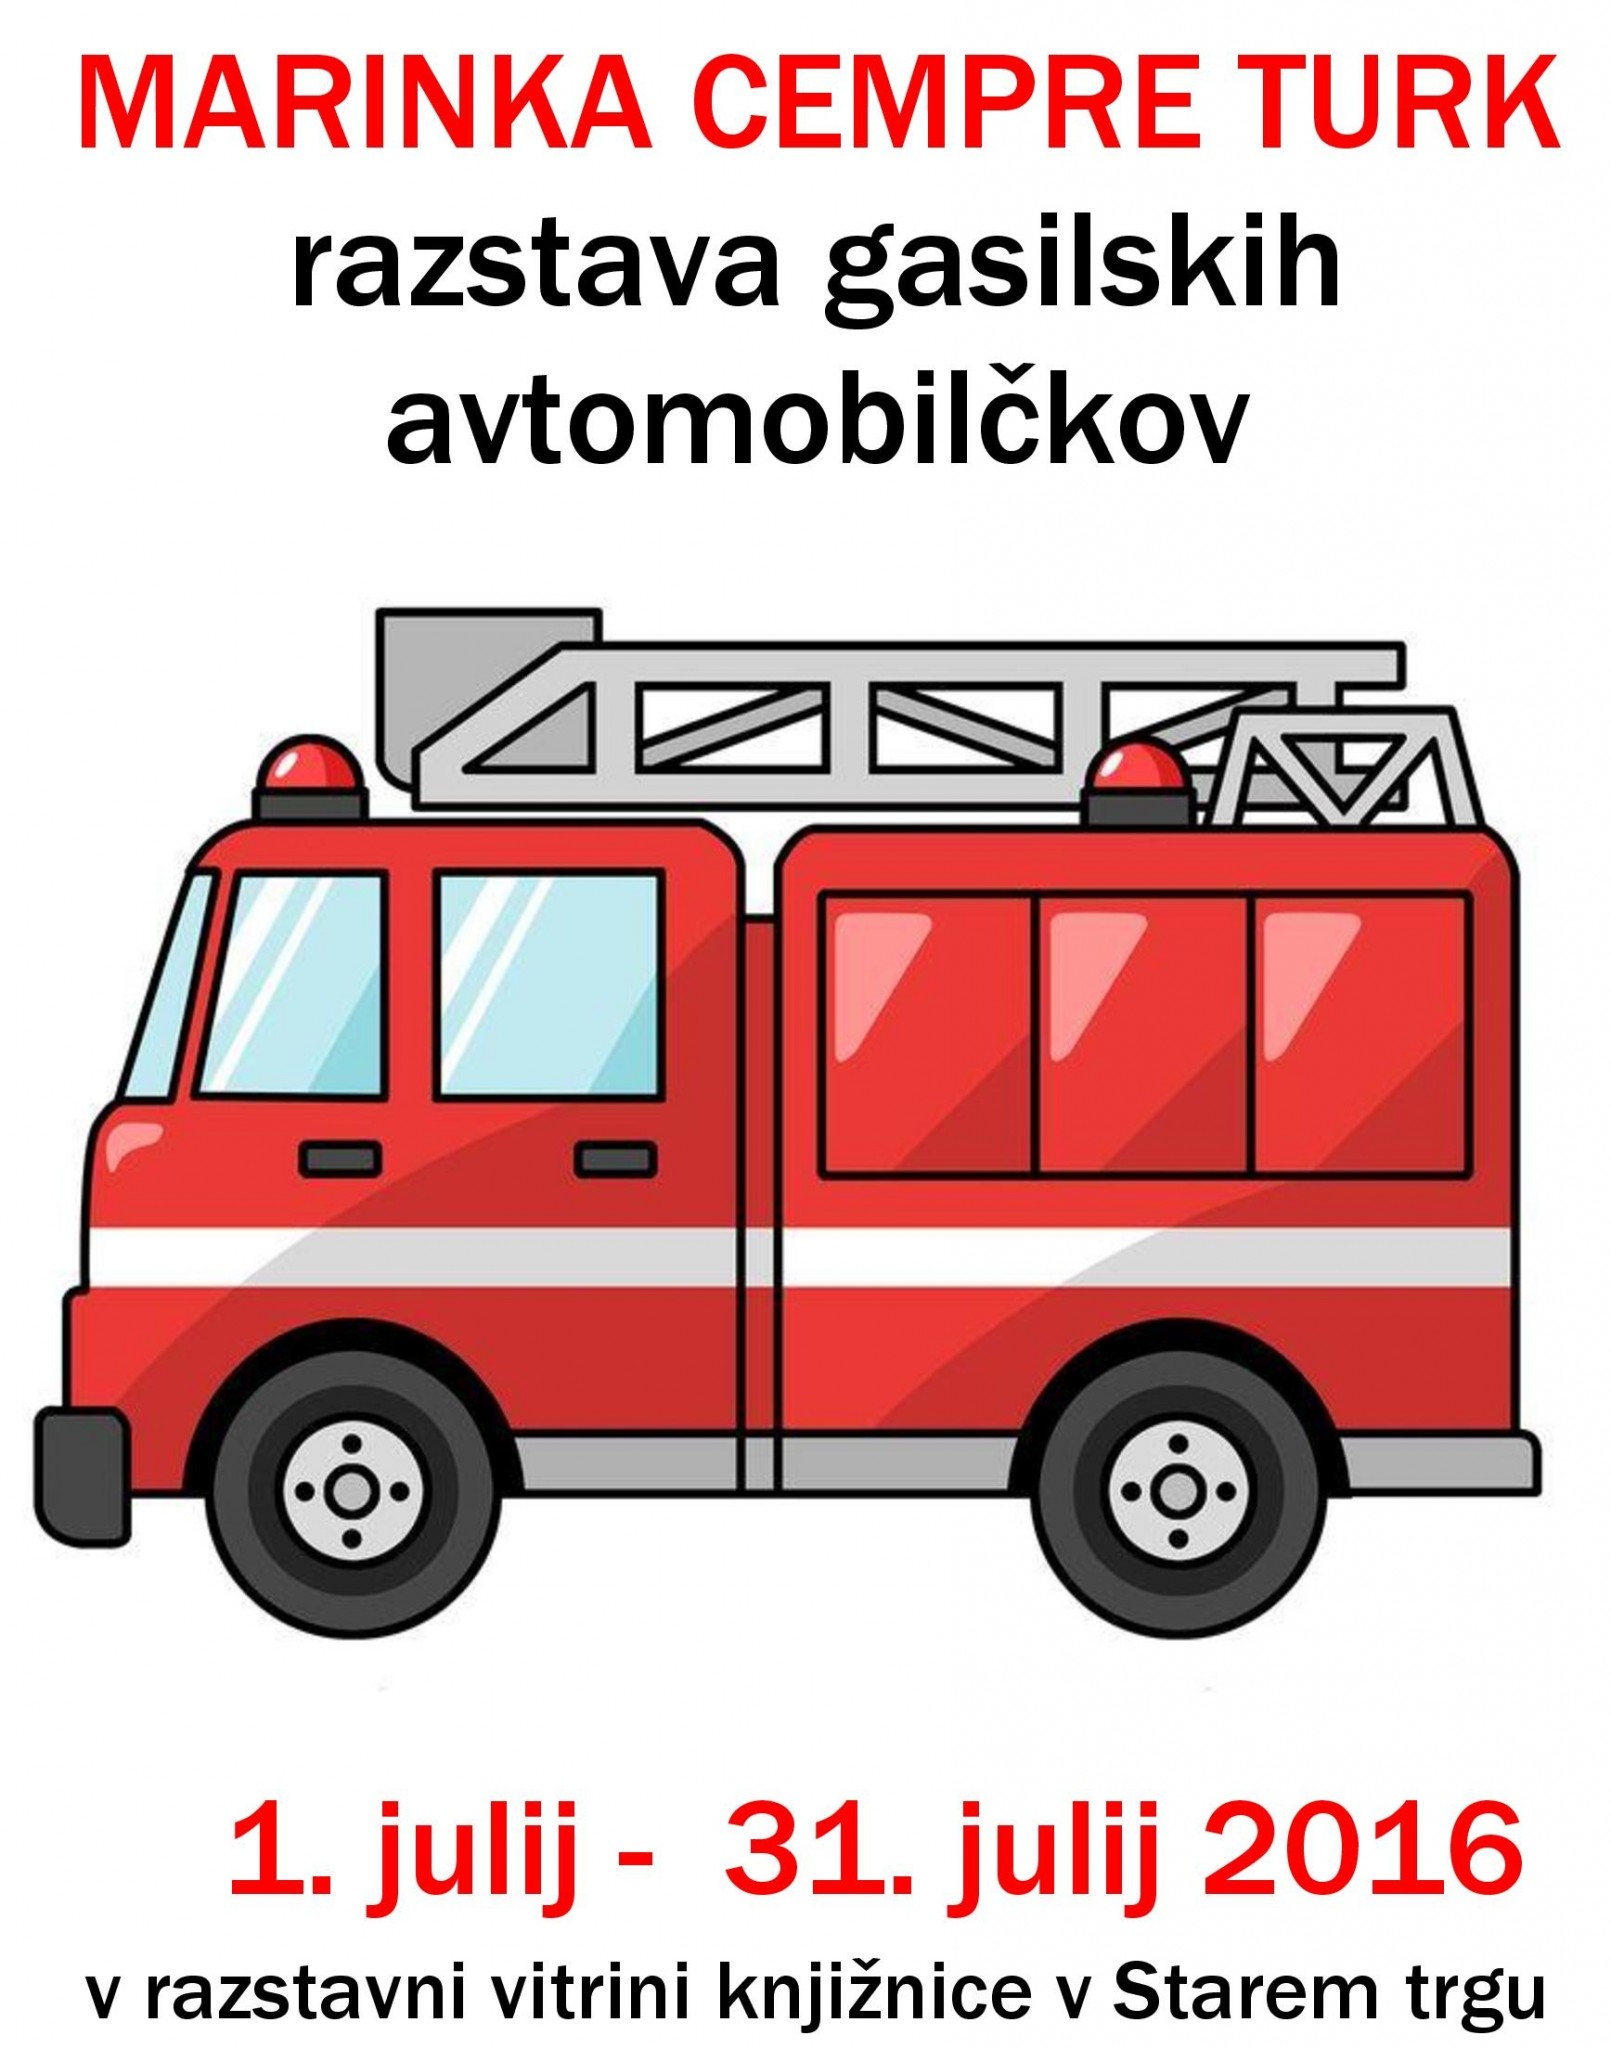 cover 1 - Marinka Cempre Turk - razstava gasilskih avtomobilčkov